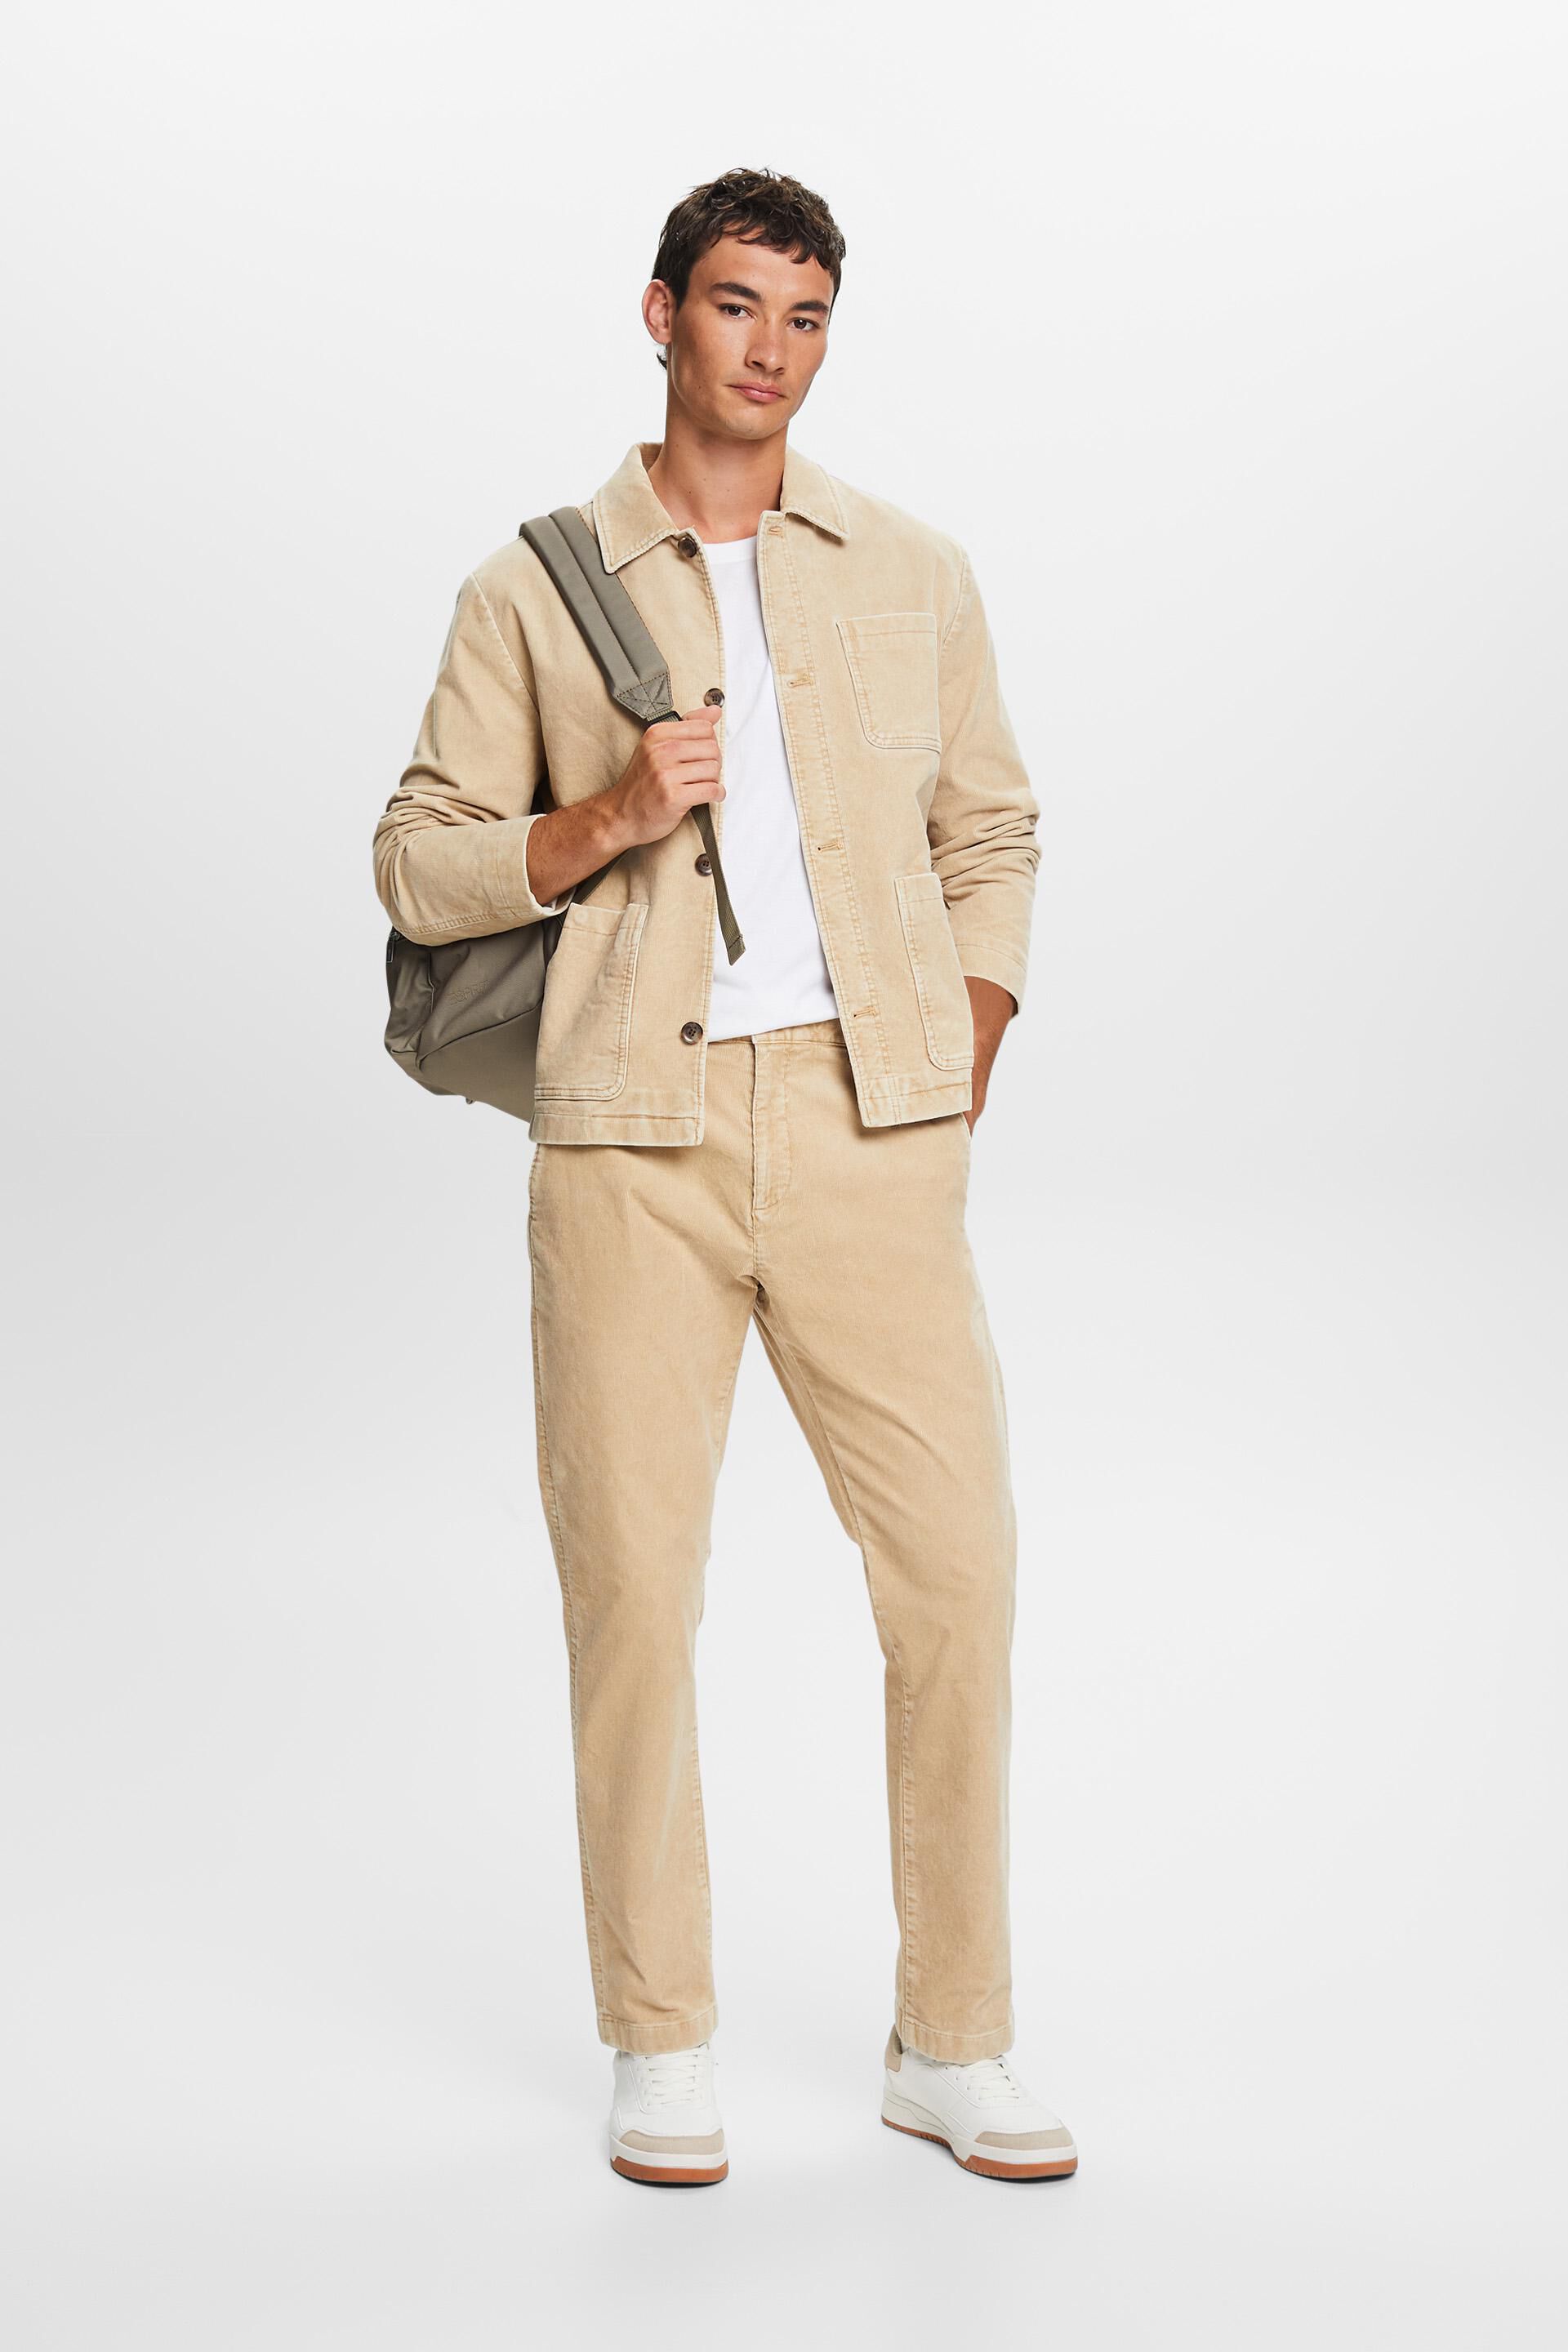 ESPRIT Men's Woven Trousers Sweatpants, Navy, S : Buy Online at Best Price  in KSA - Souq is now Amazon.sa: Fashion